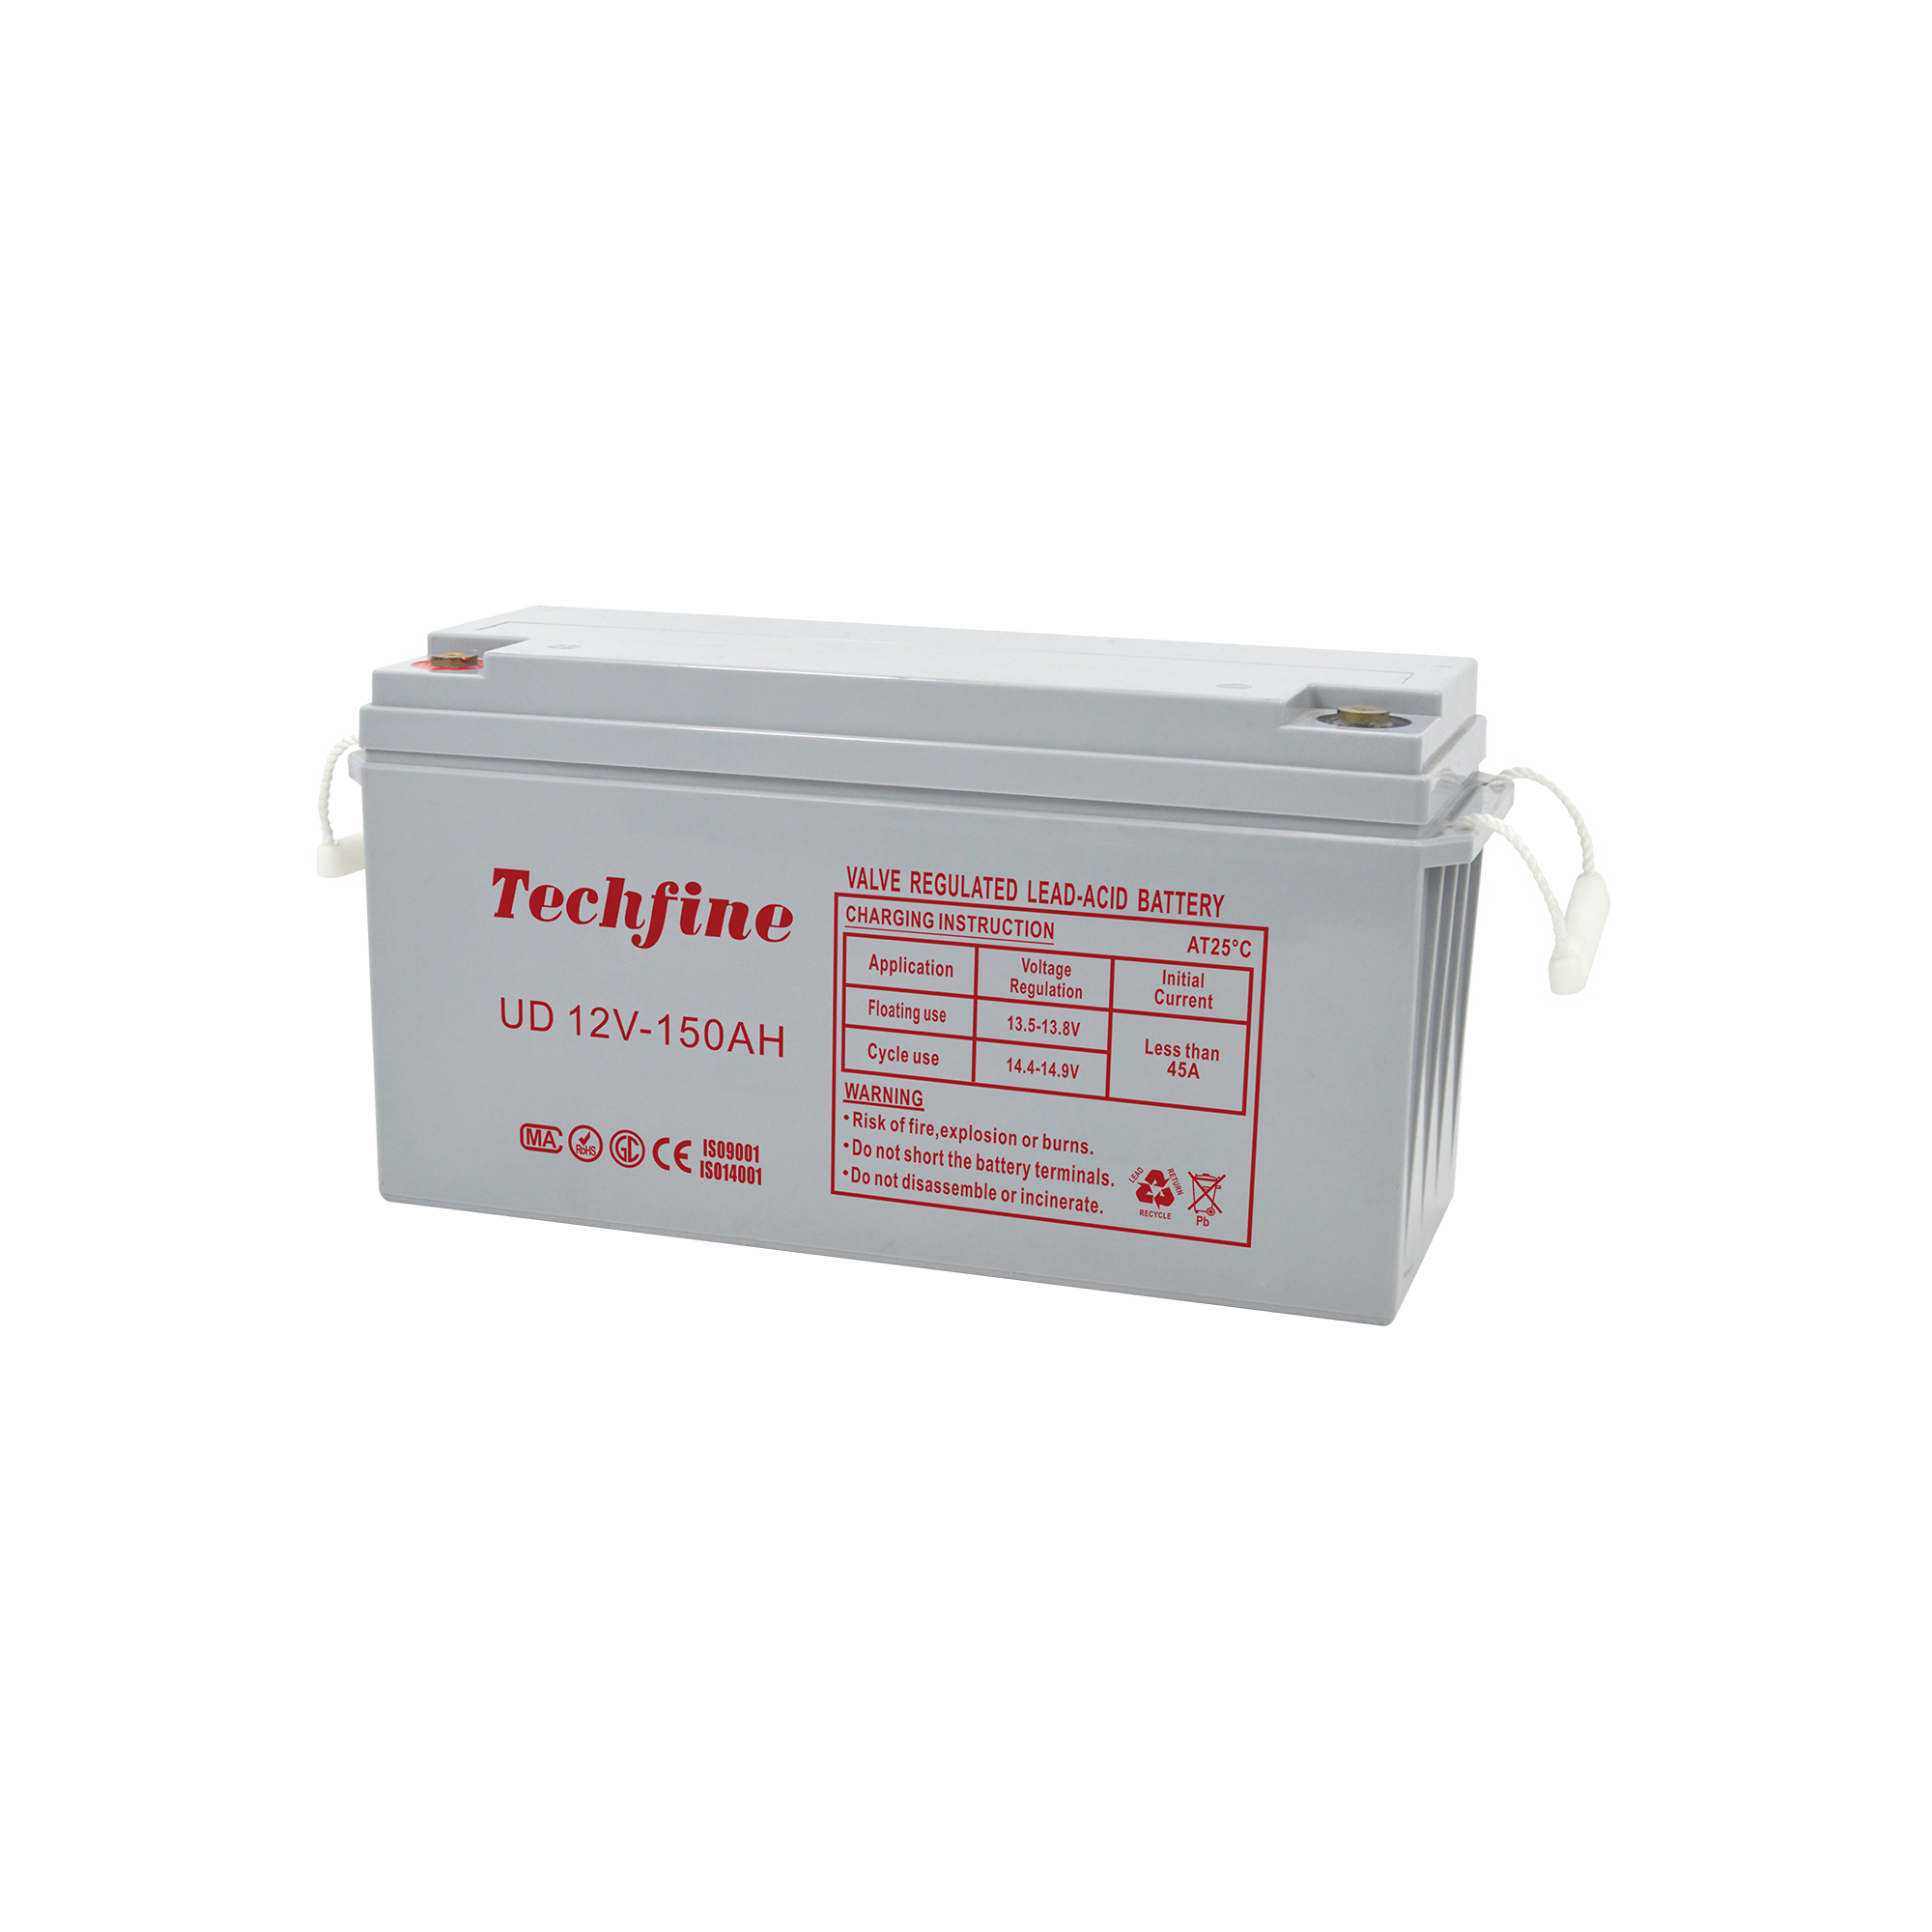 Techfine solar battery 12V 150AH Lead Acid Battery off grid